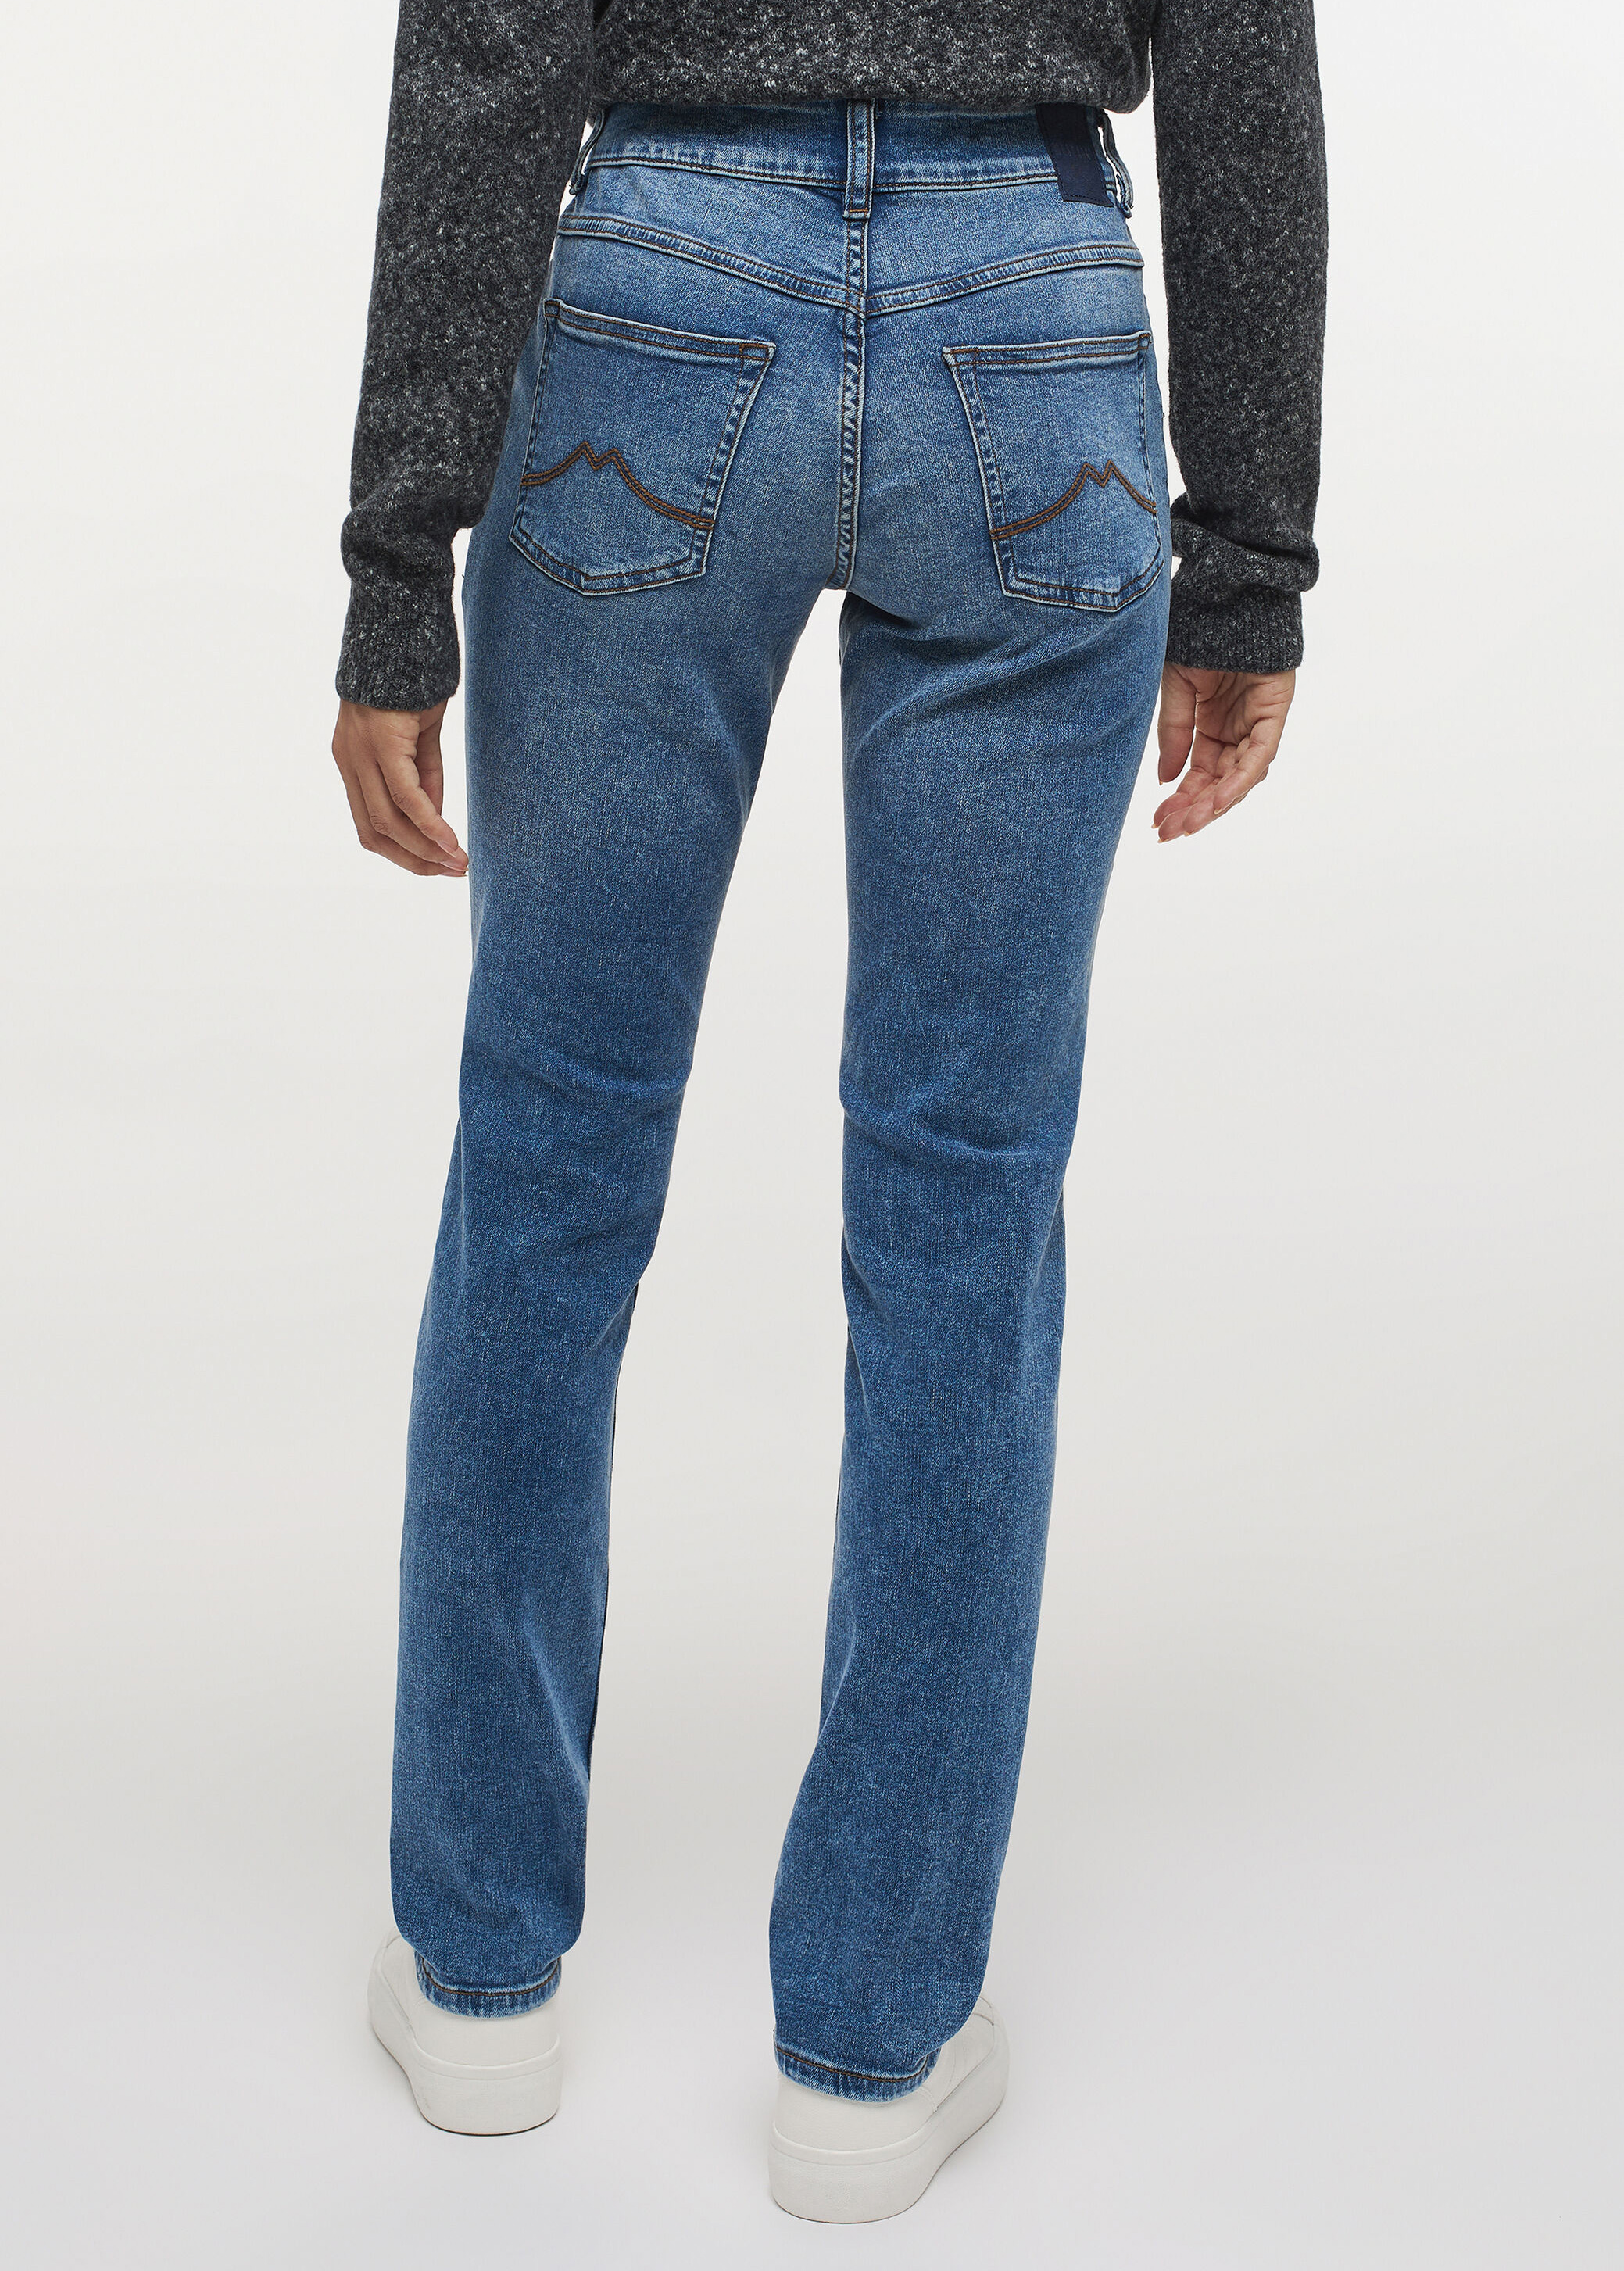 Woman's Jeans Mustang® Rebecca 2B - Denim Blue (402) 1013348-5000-402 / Blue